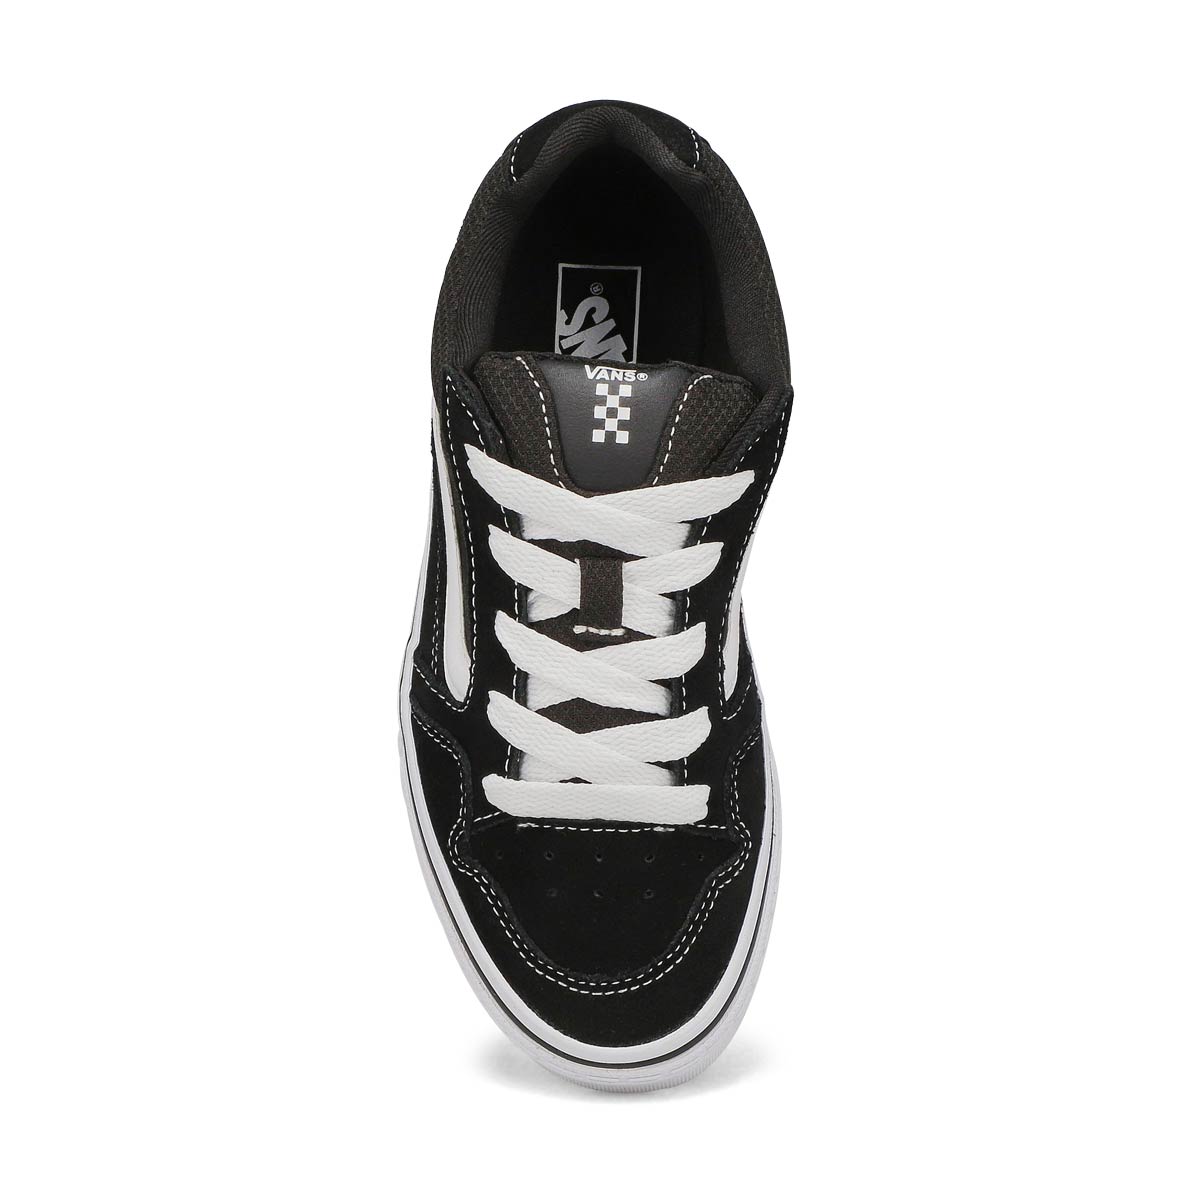 Boys' Caldrone Lace Up Sneaker - Black/White